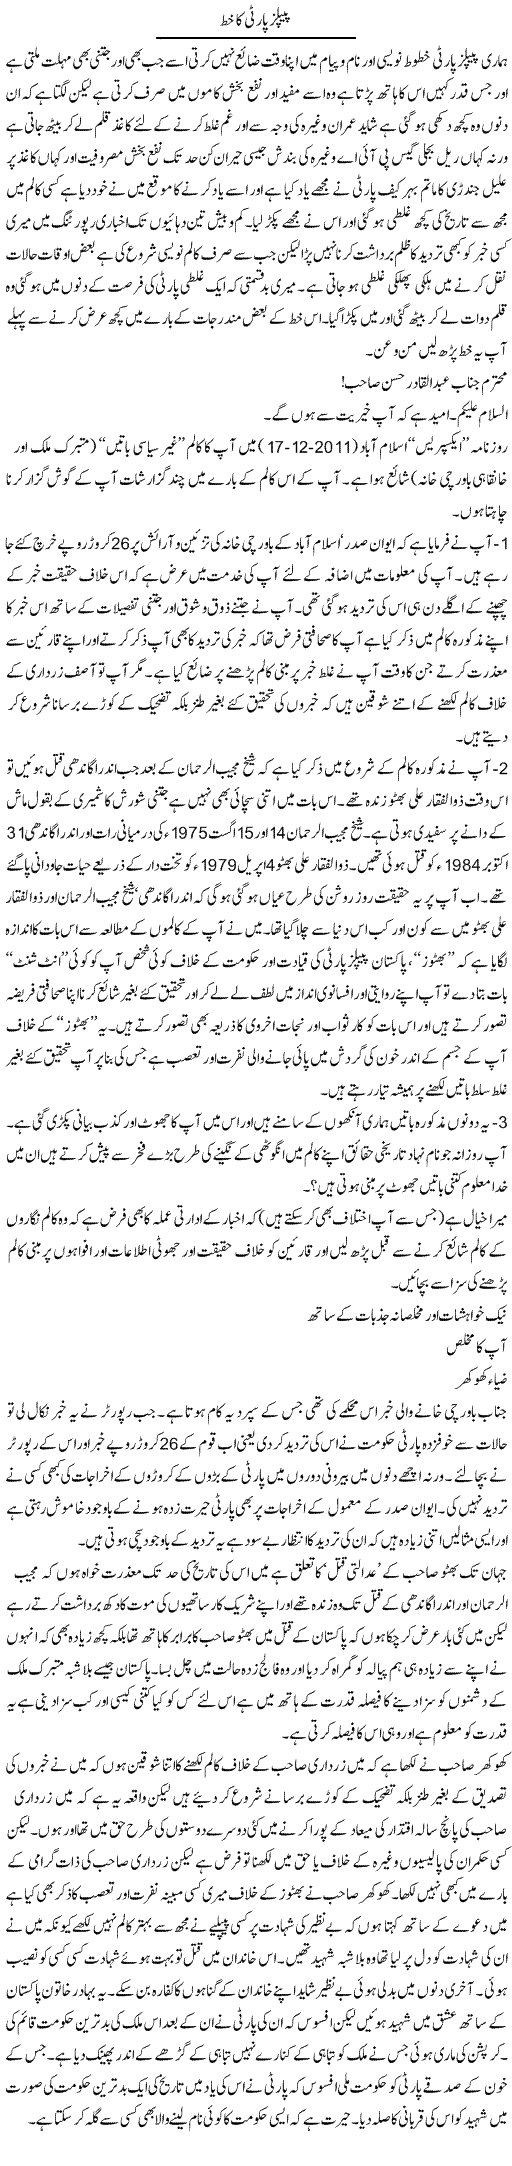 Letter of PPP Express Column Abdul Qadir 24 December 2011